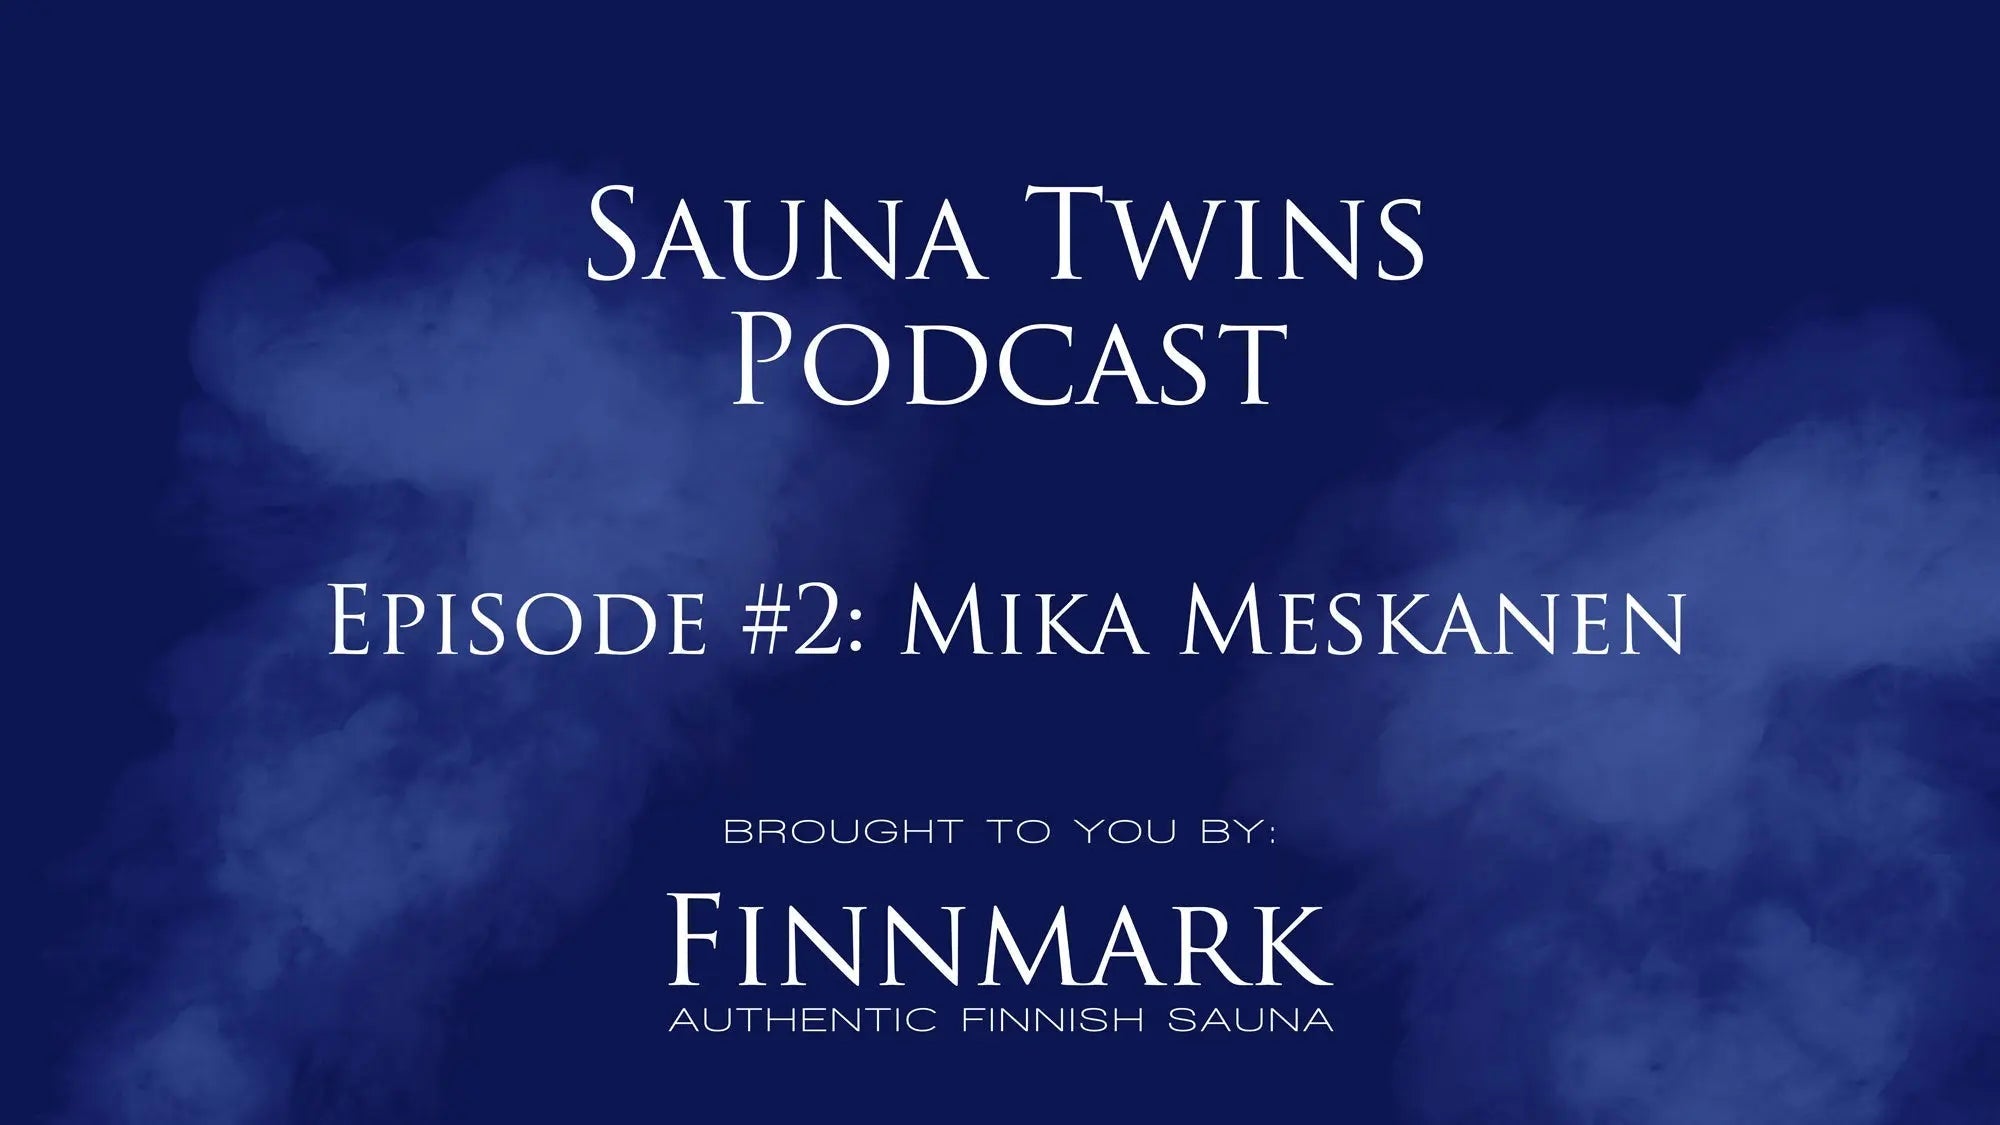 Sauna Twins Podcast Episode #2 Mika Meskanen | Finnmark Sauna - Finnmark Sauna